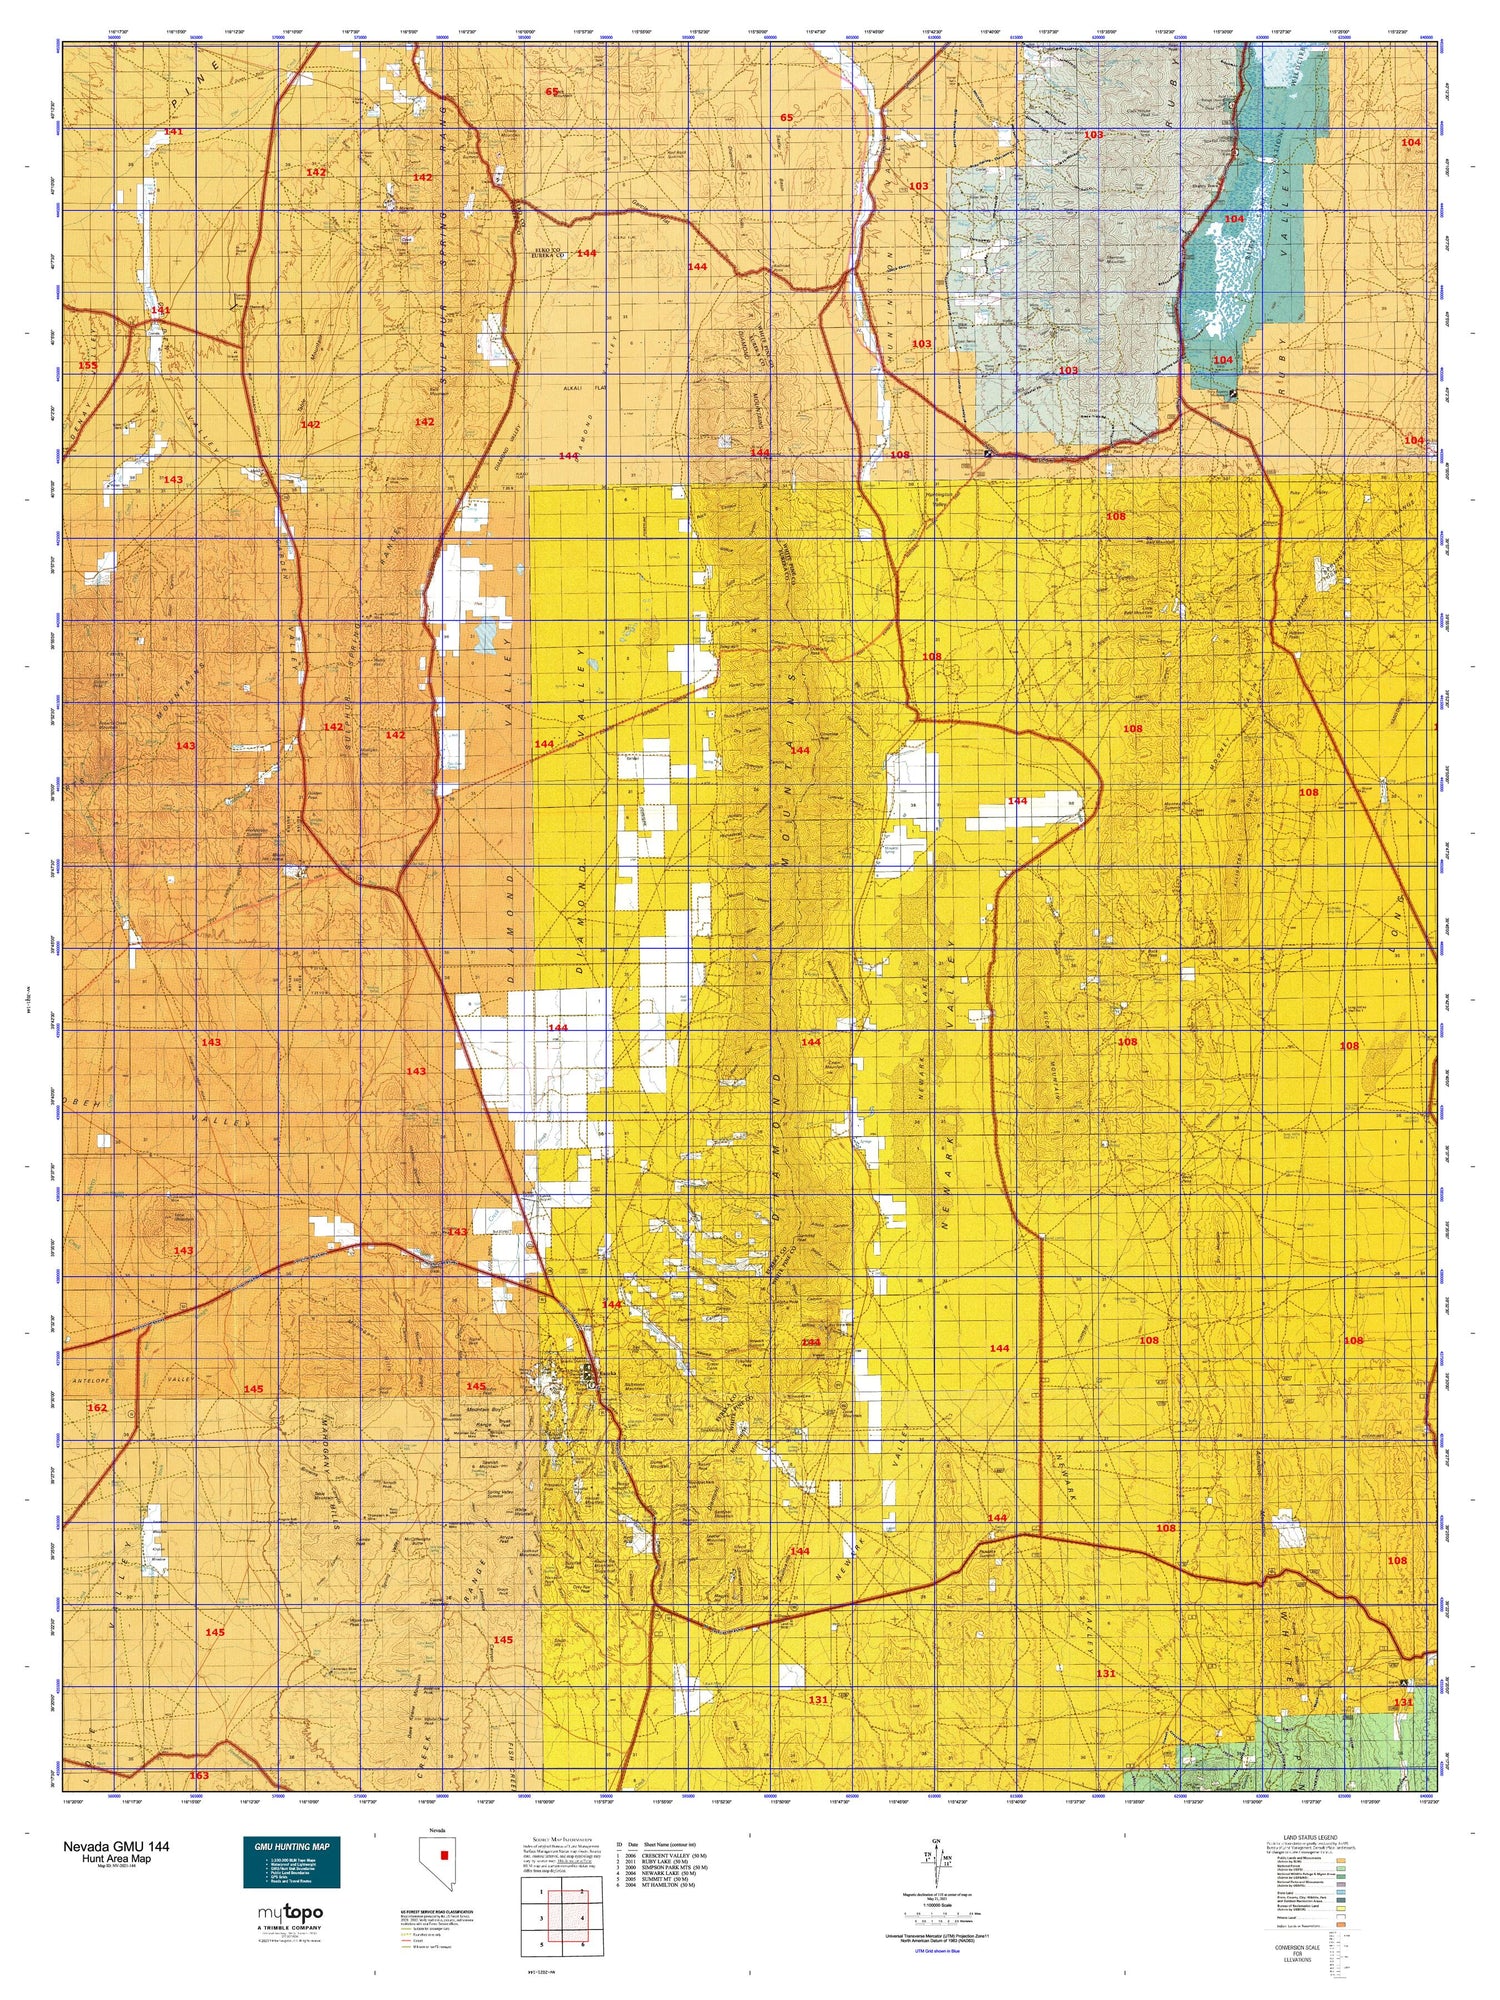 Nevada GMU 144 Map Image